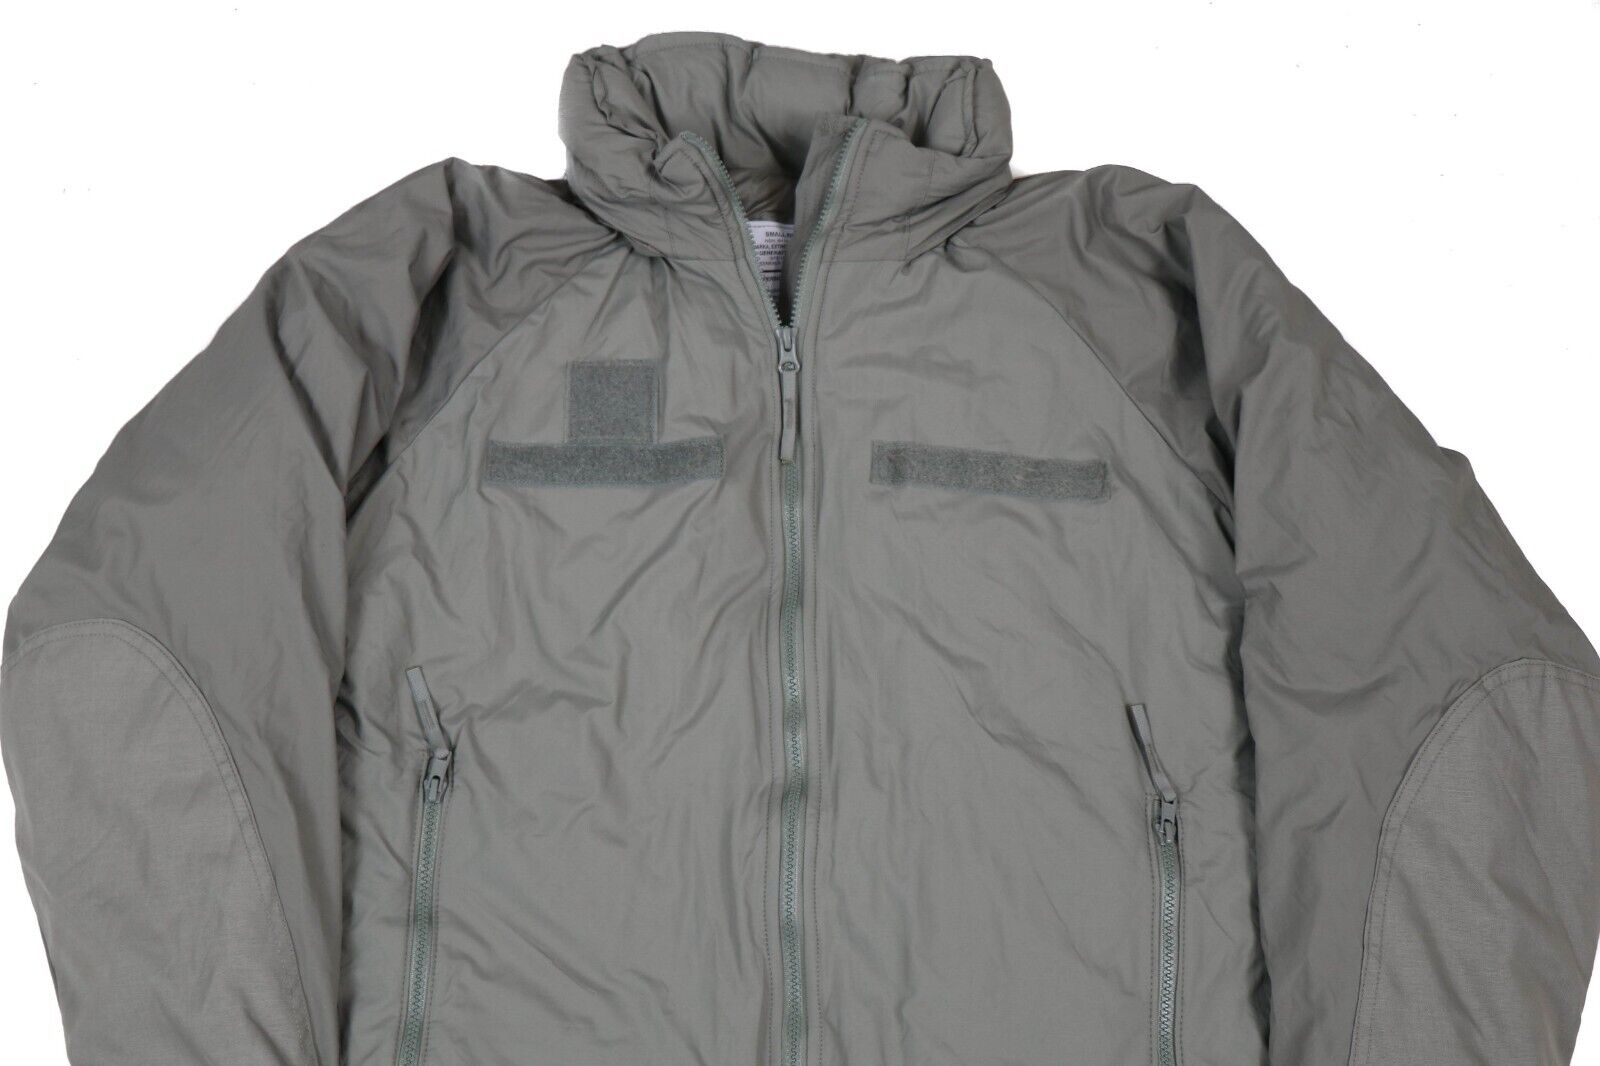 Primaloft GEN III Level 7 ECWCS Parka Extreme Cold Weather Jacket Coat L7